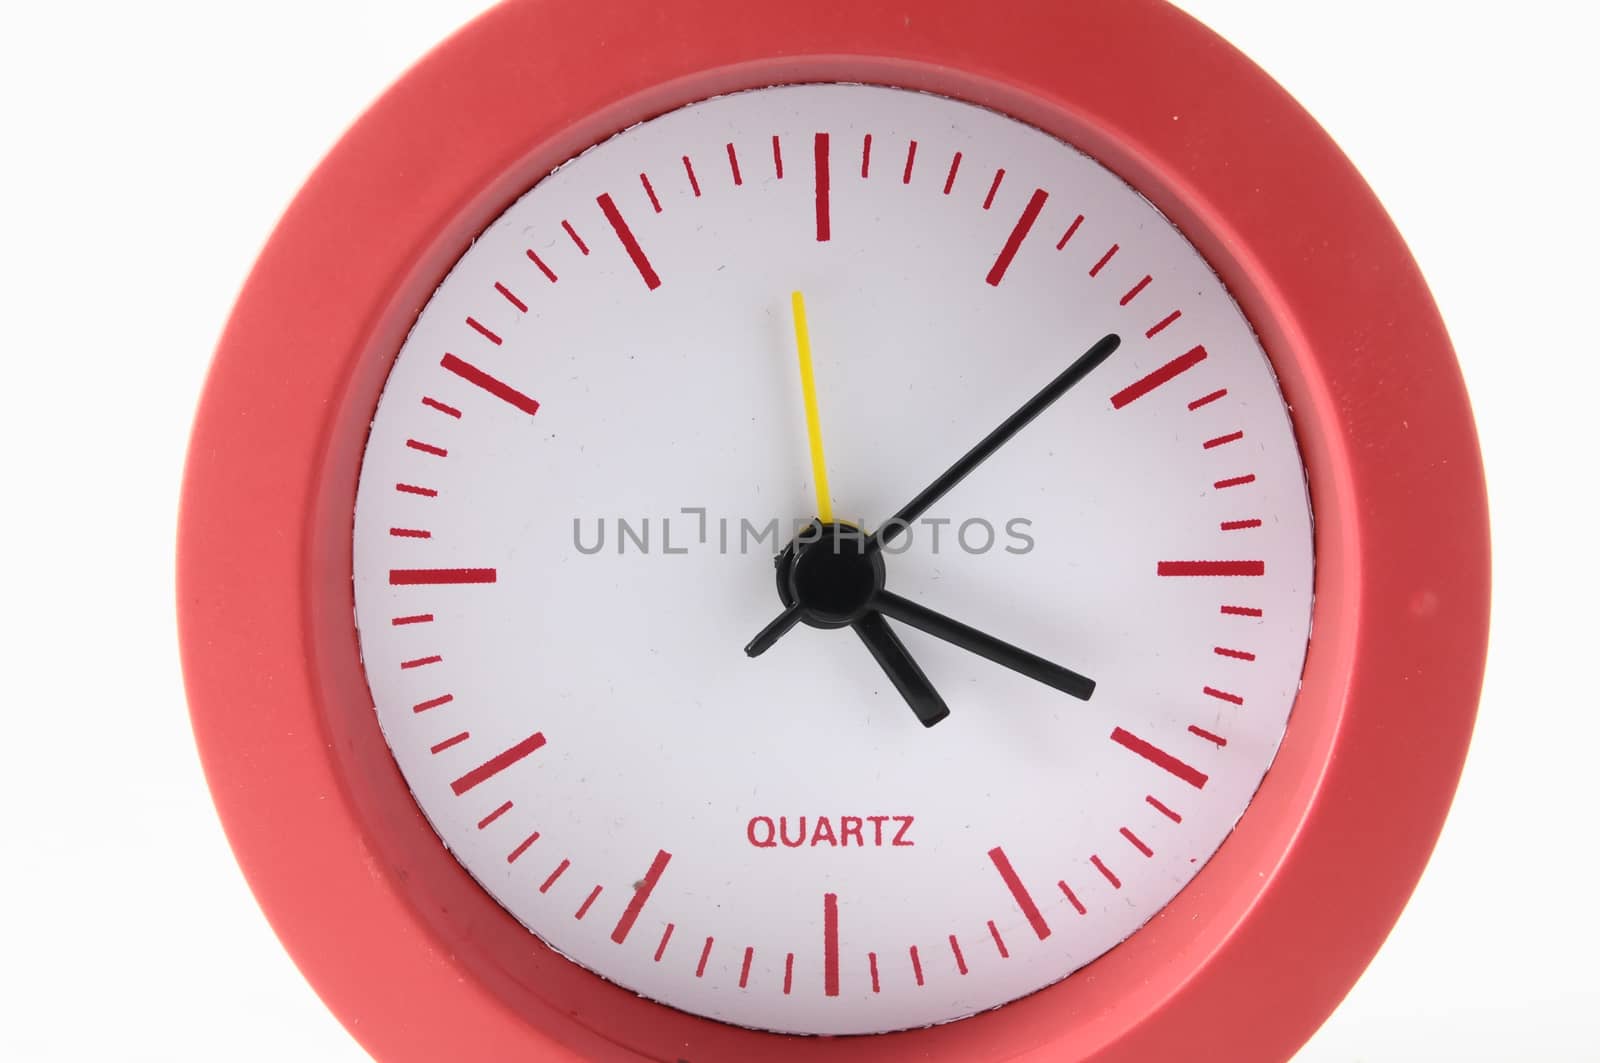 Retro Vintage Alarm Clock on a White Background